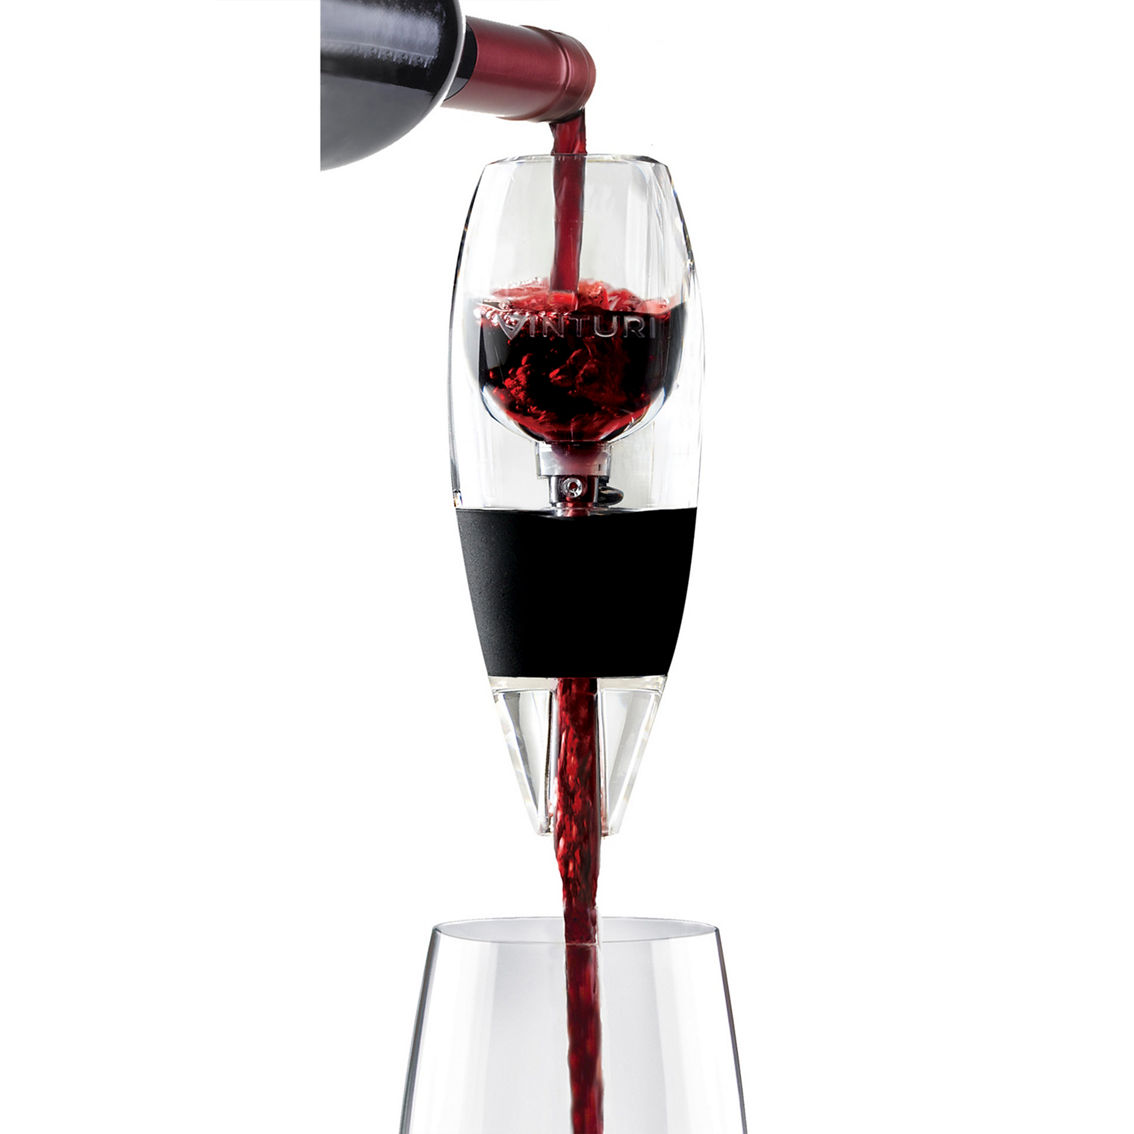 Vinturi Deluxe Red Wine Aerator - Image 2 of 6